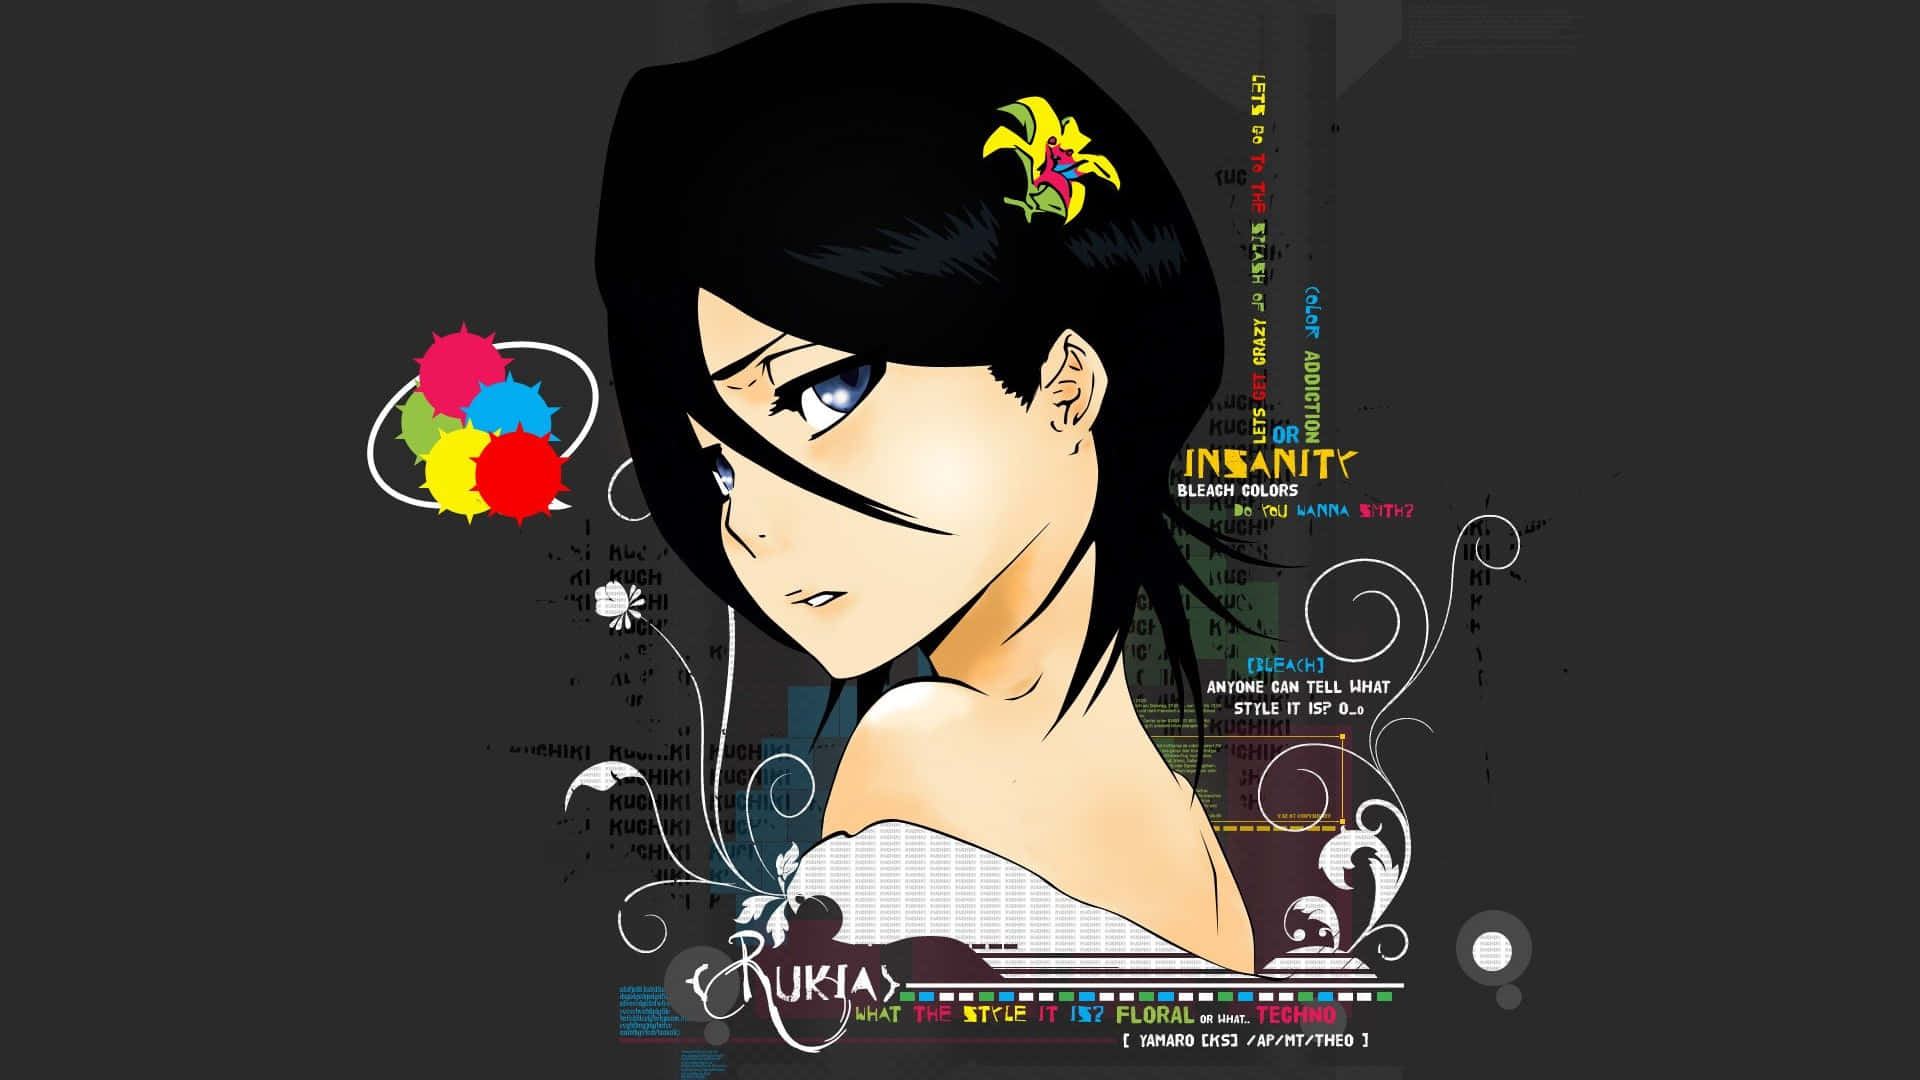 Rukia Kuchiki, a Soul Reaper from the manga series Bleach Wallpaper